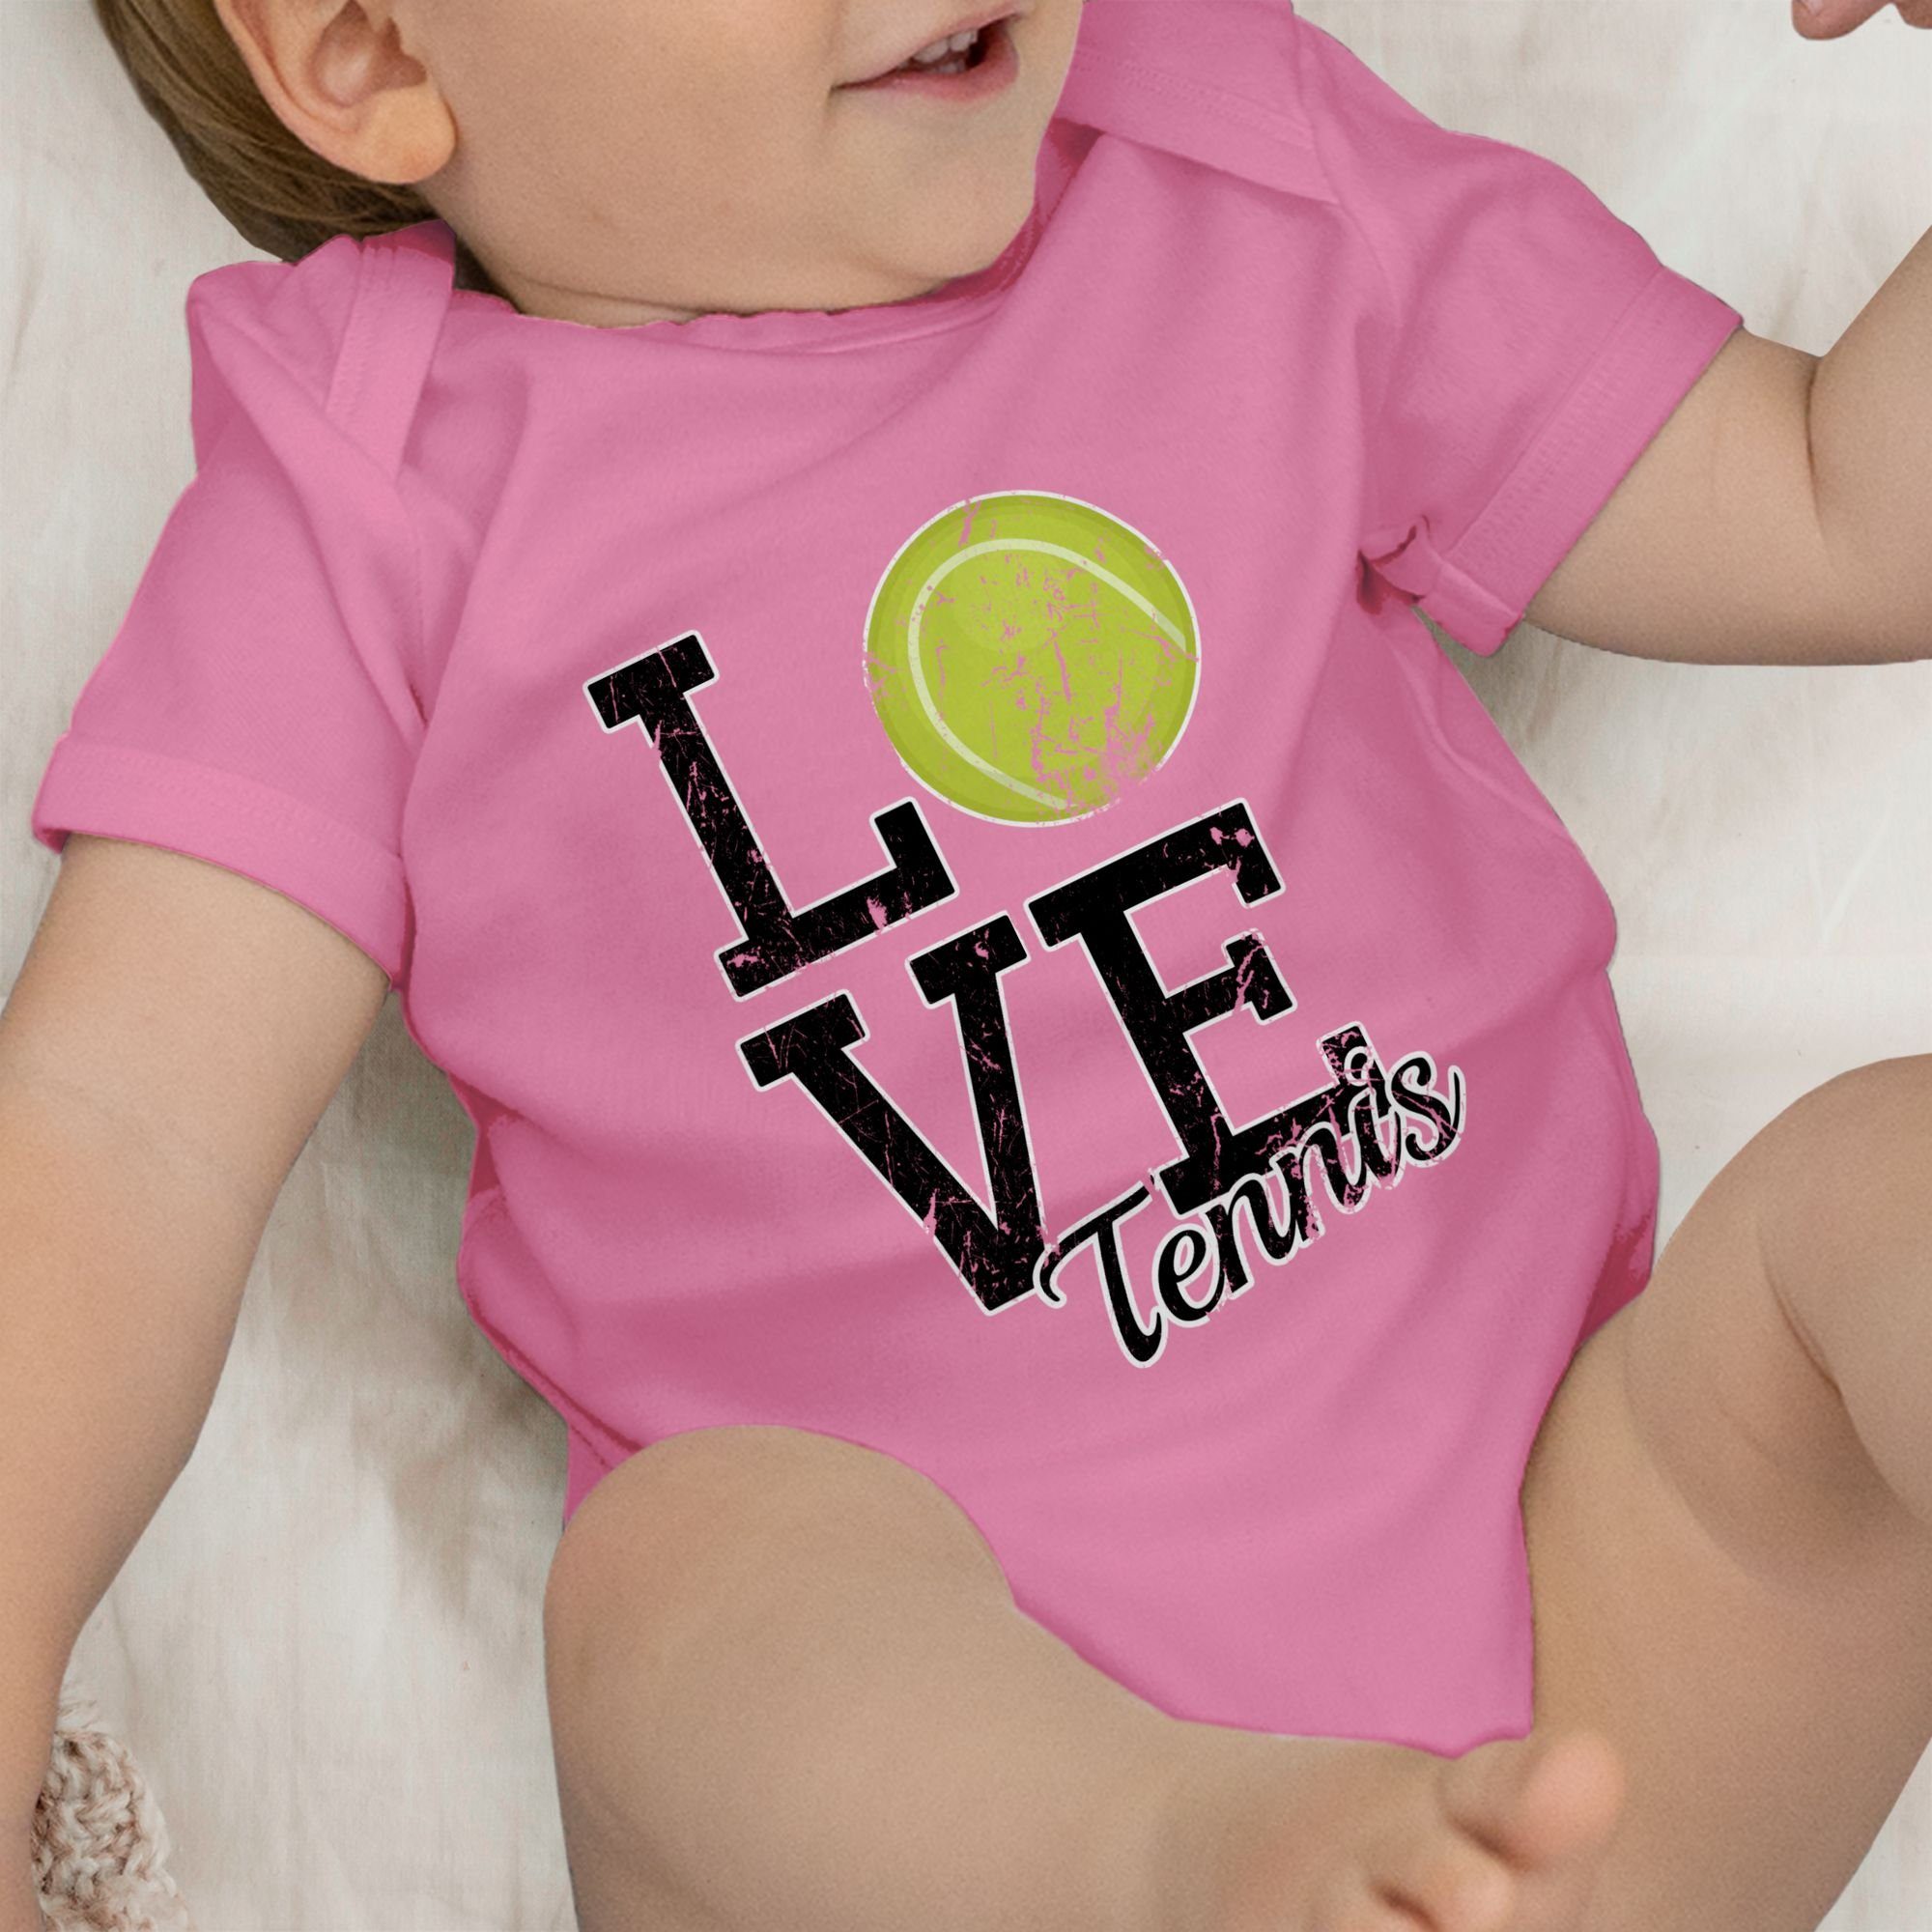 Tennis & Shirtracer Bewegung Pink 1 Love Sport Shirtbody Baby